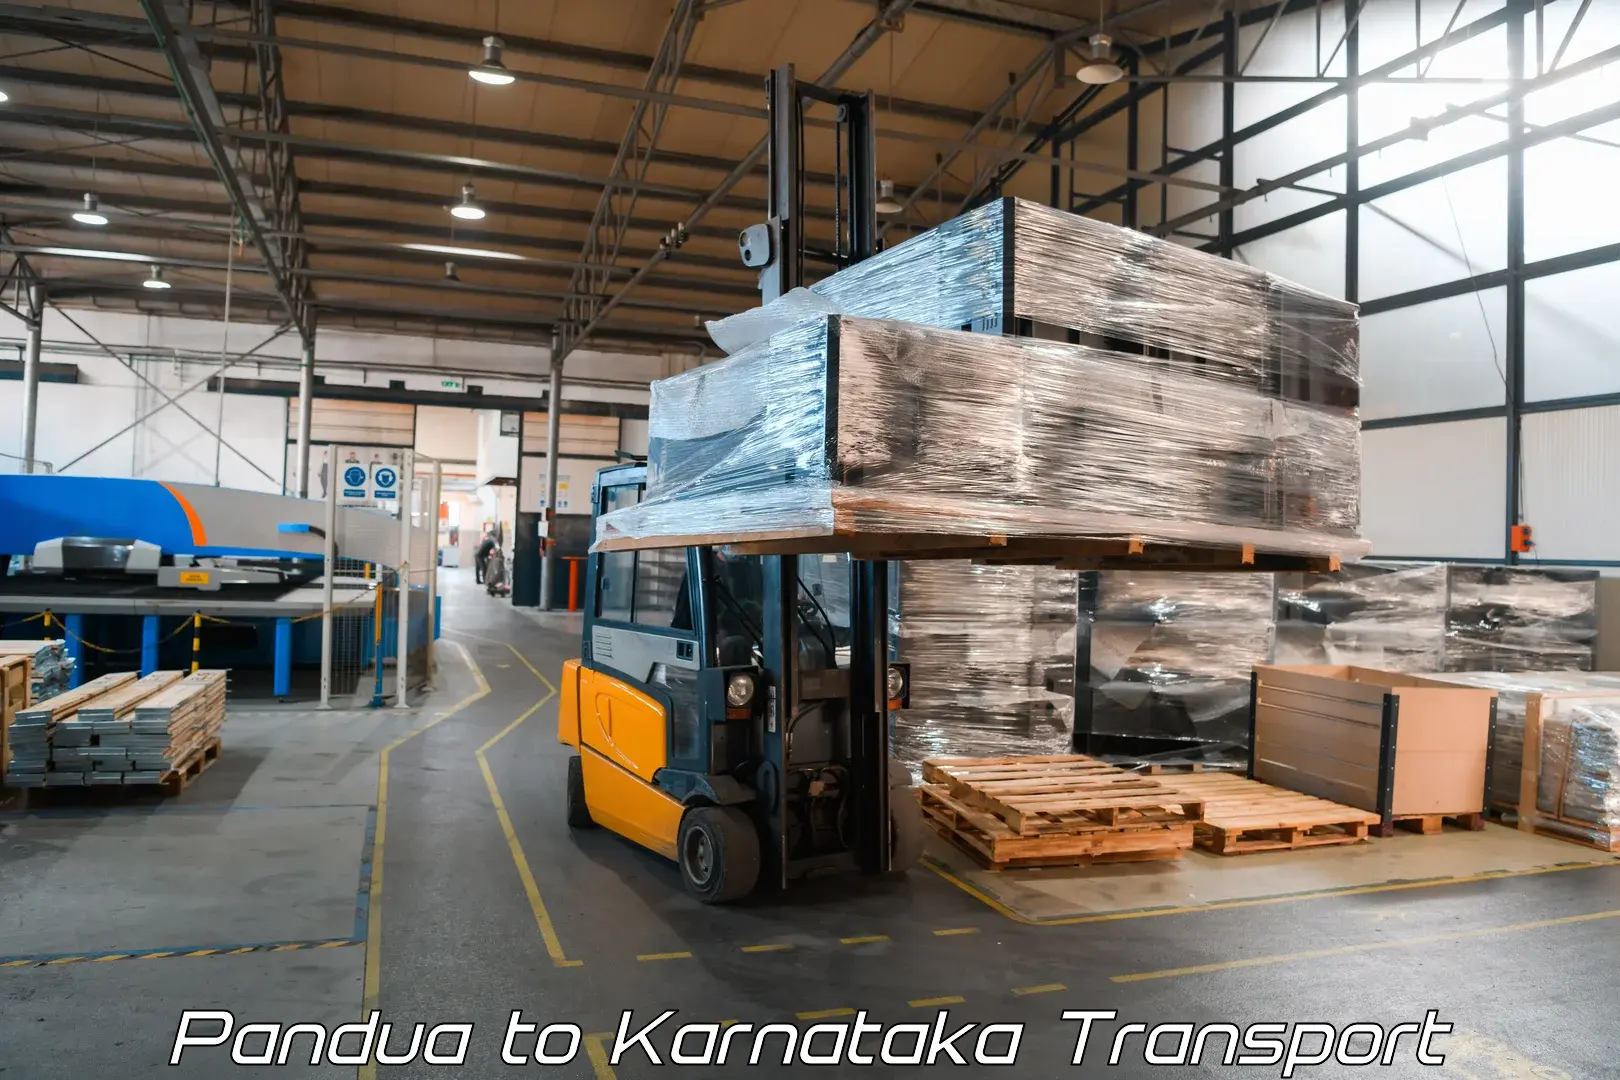 Shipping partner Pandua to Pavagada